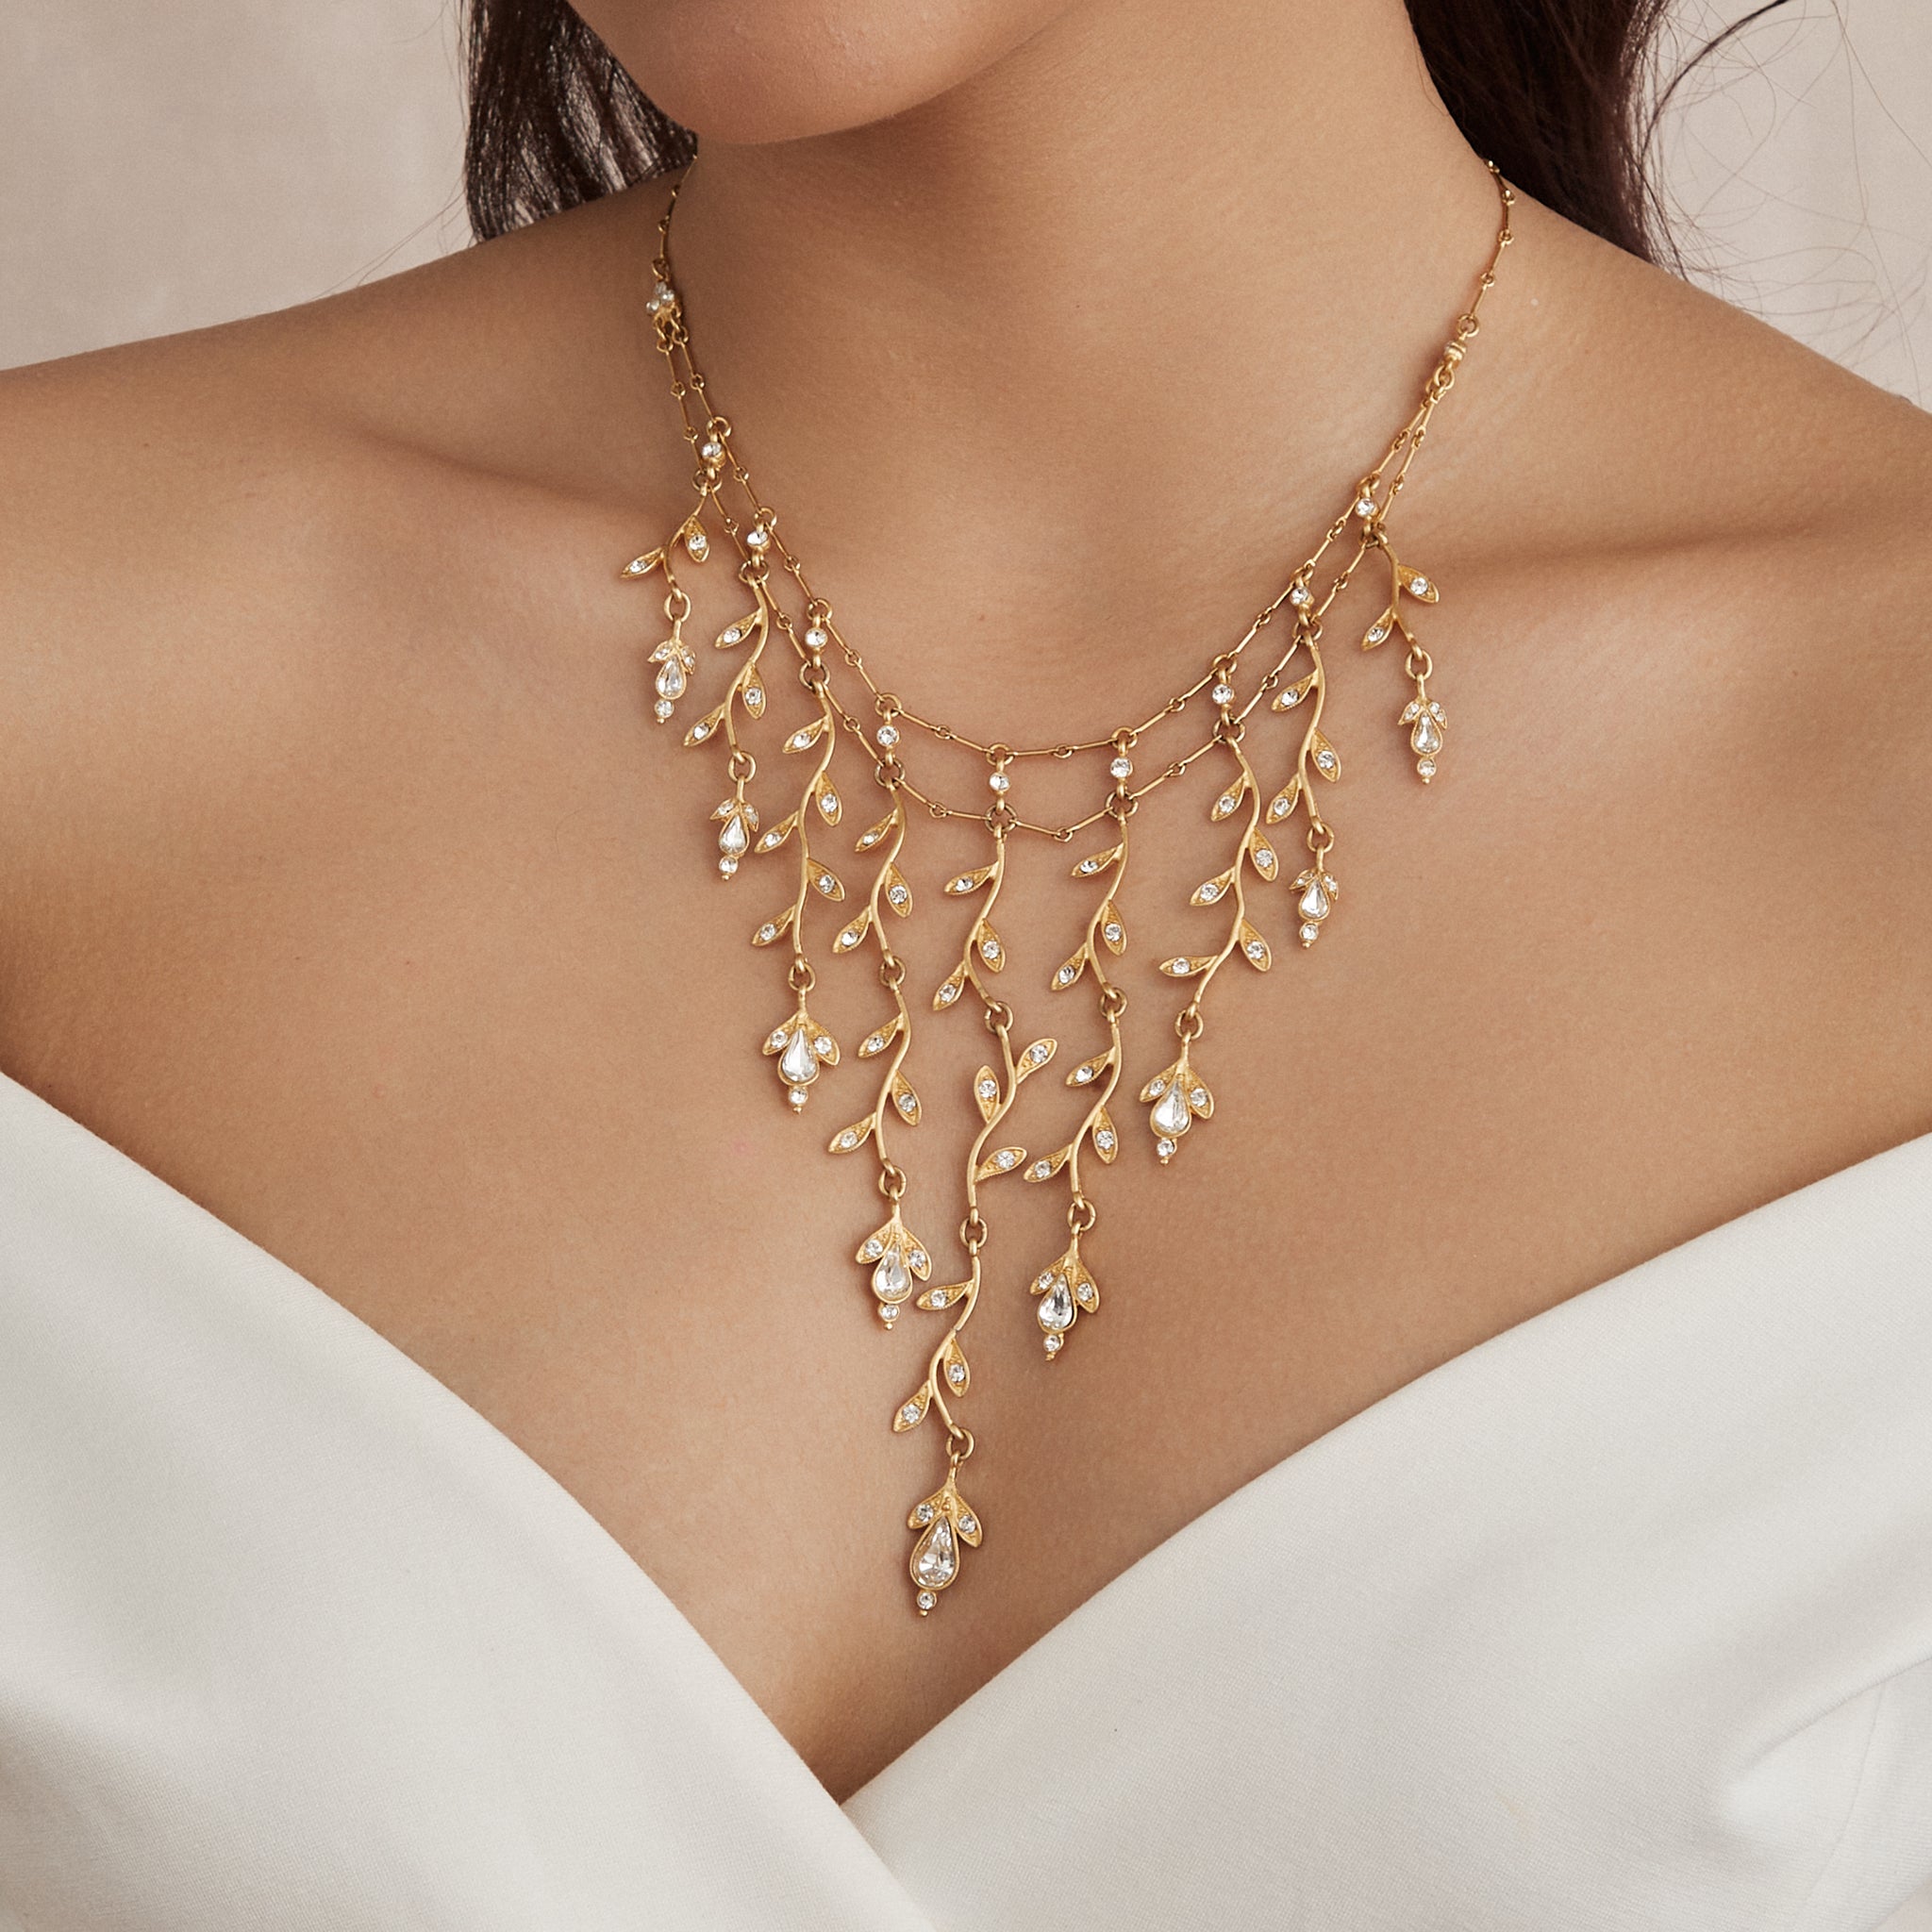 Maureen Hammered Gold Chain Necklace | Ben- Amun Jewelry